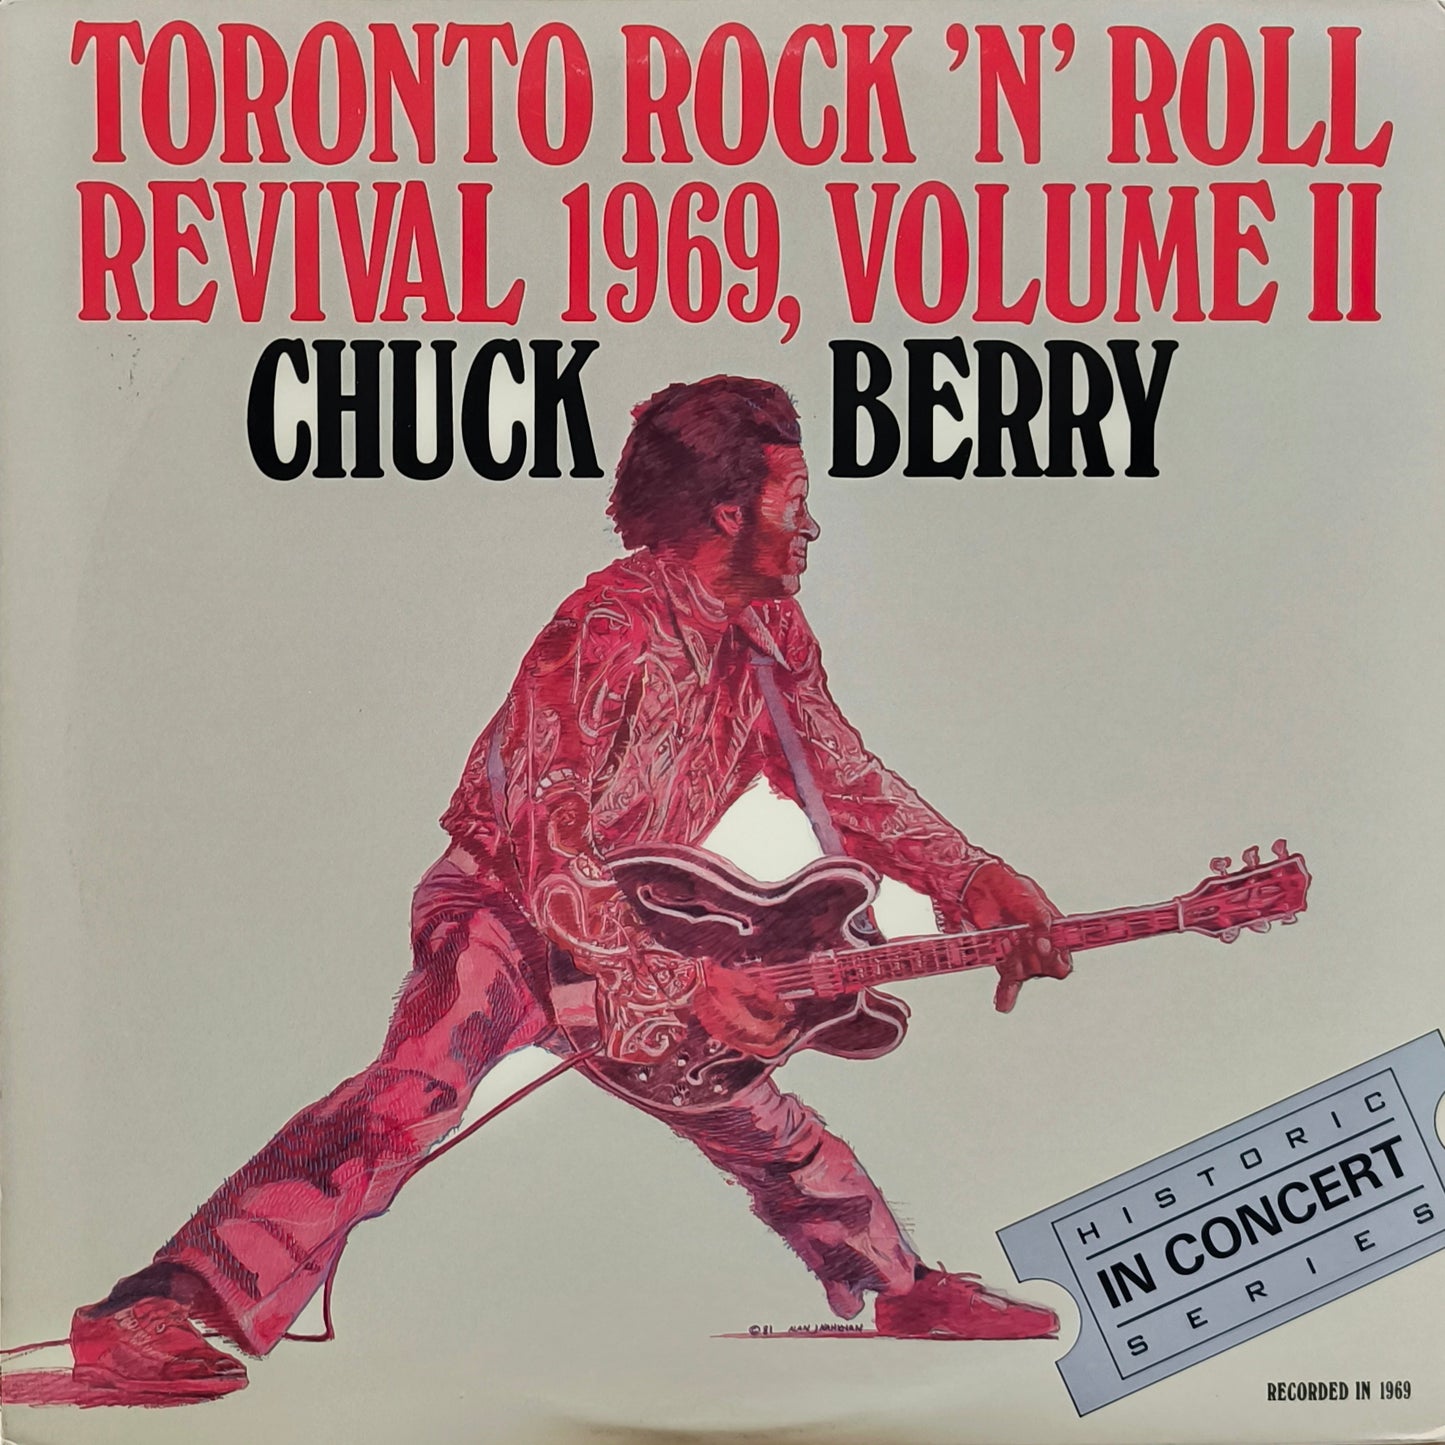 CHUCK BERRY - Toronto Rock 'N' Roll Revival 1969, Volume II